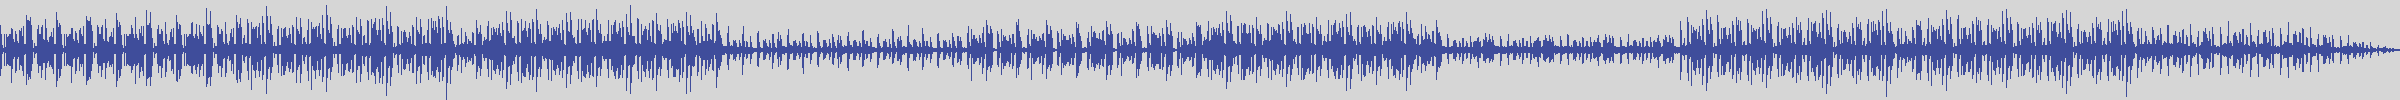 noclouds_chillout [NOC110] Petite Boutique - The Veiled Lady [Blue Mood Mix] audio wave form